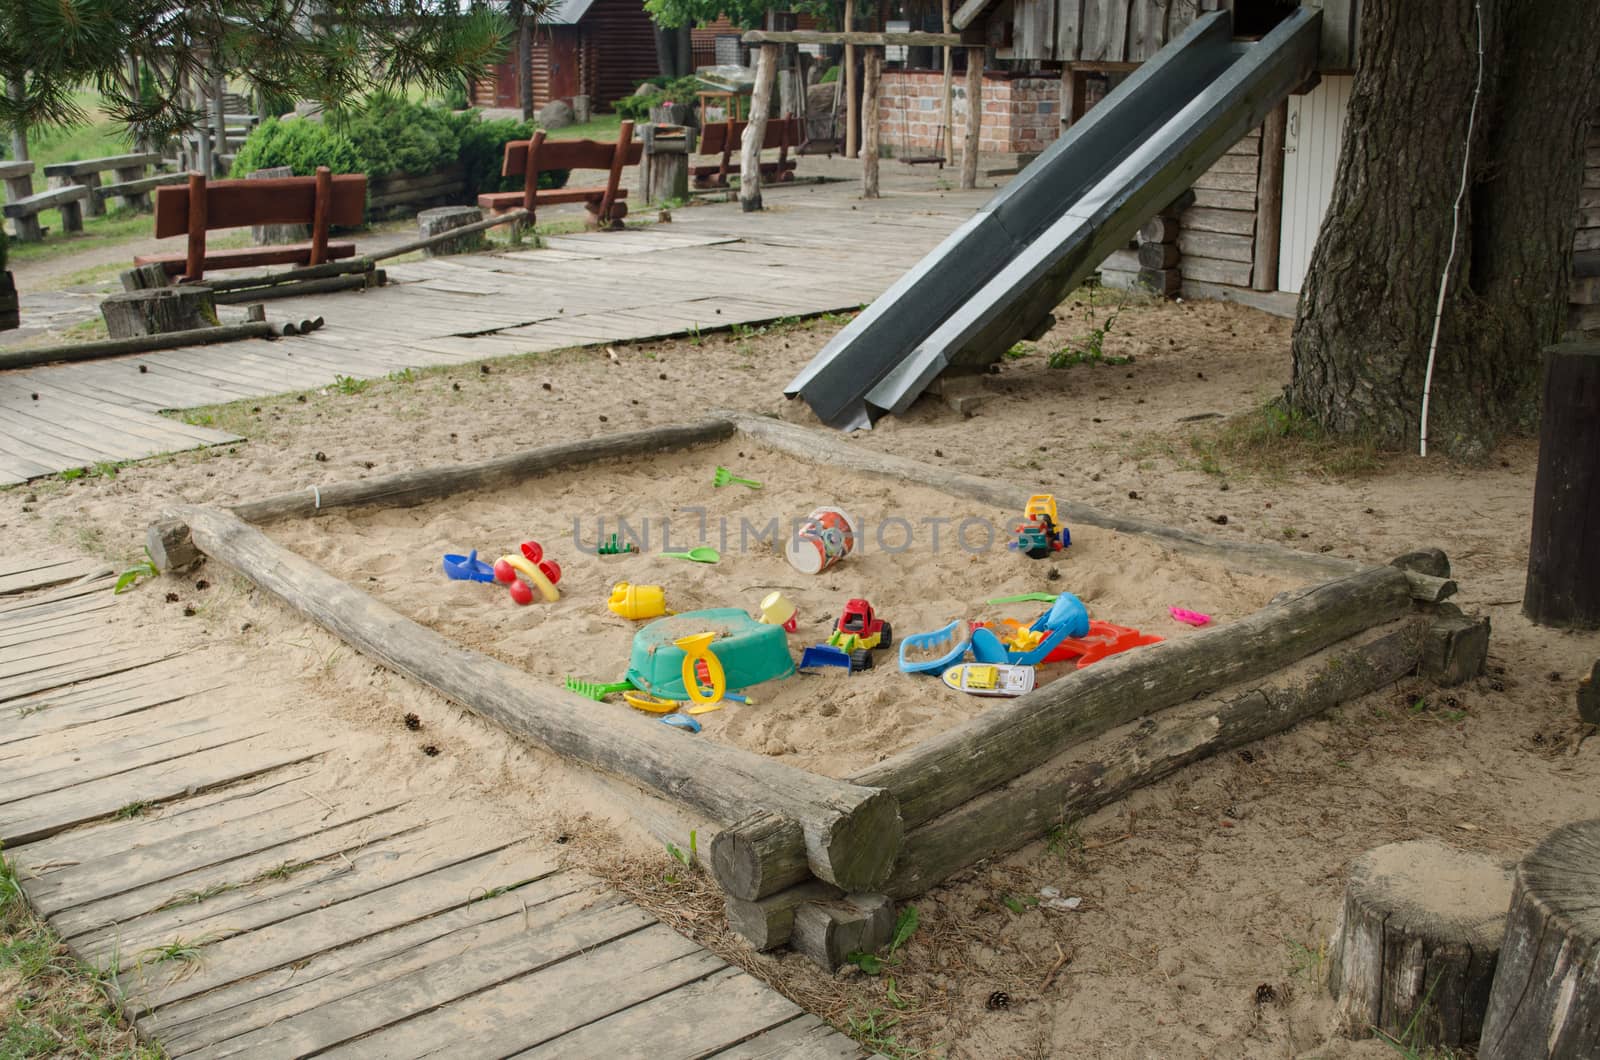 sandbox playground full of toys scattered on children recreationpark in summer time